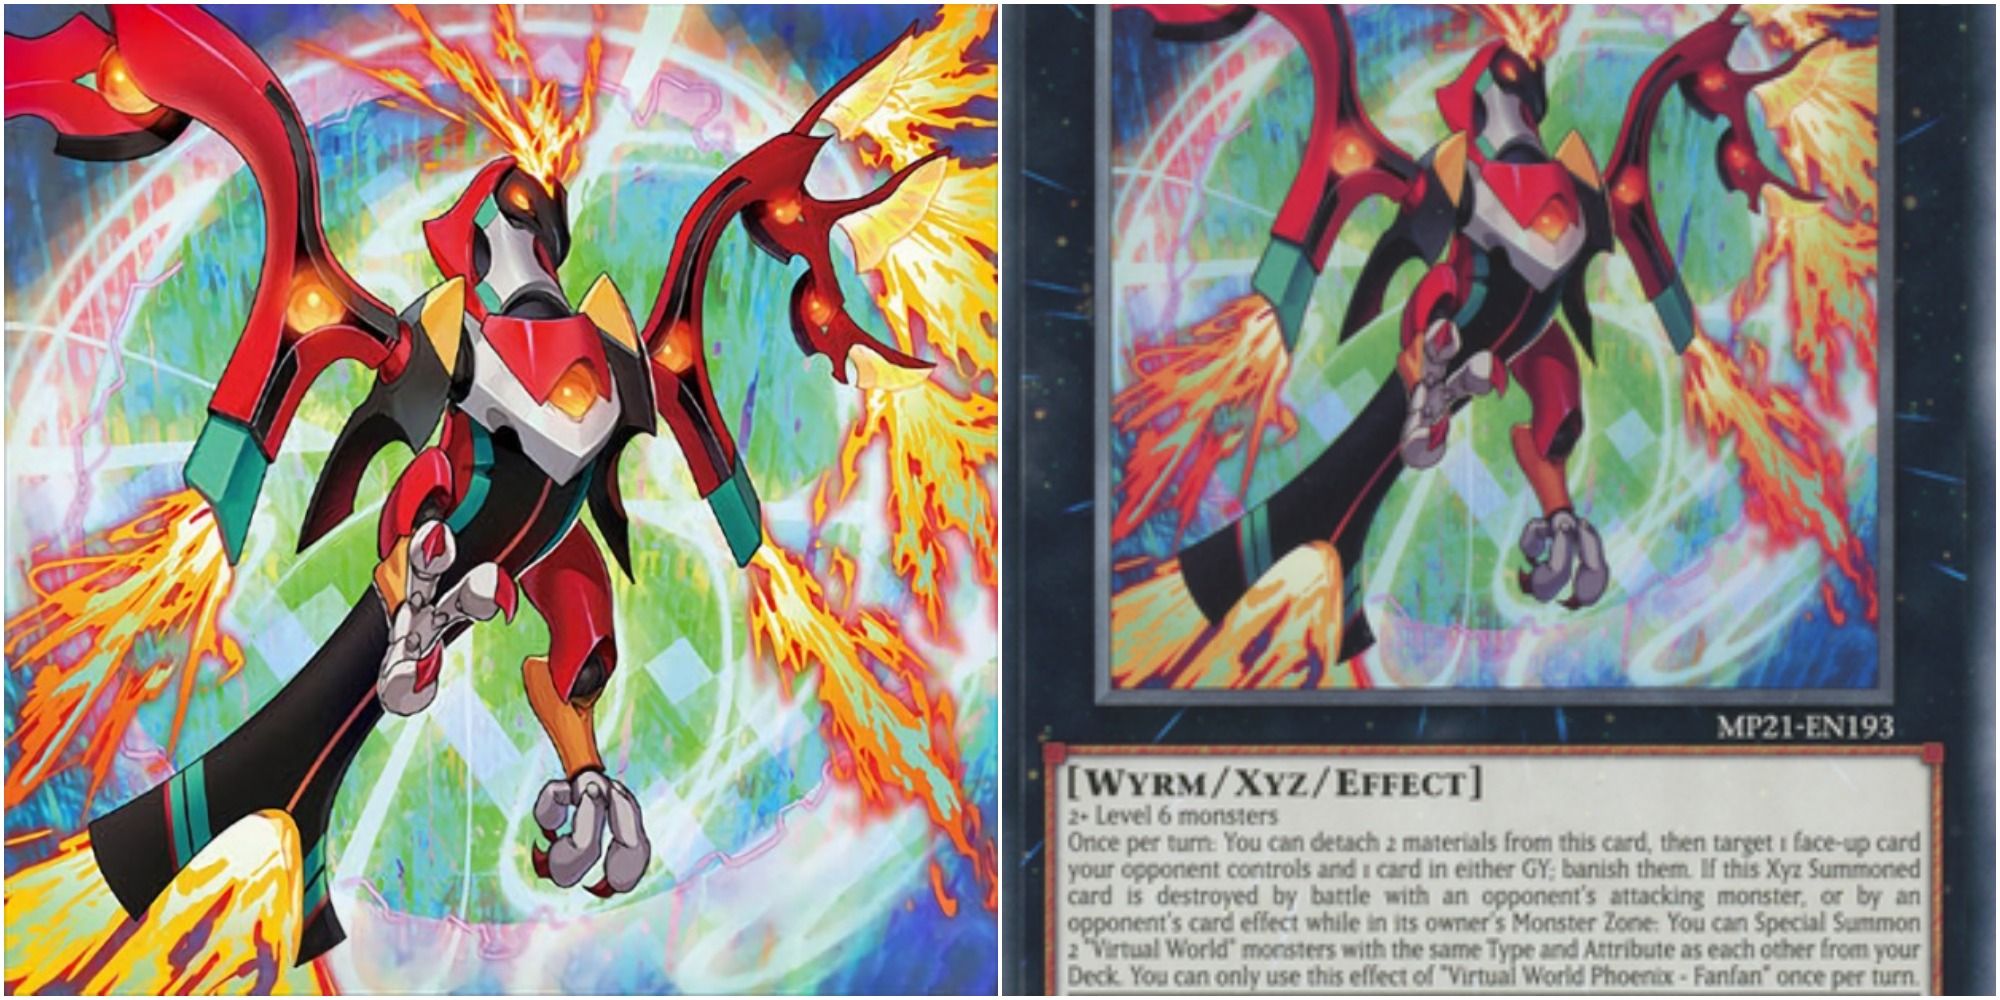 Virtual World Phoenix - Fanfan card art and text